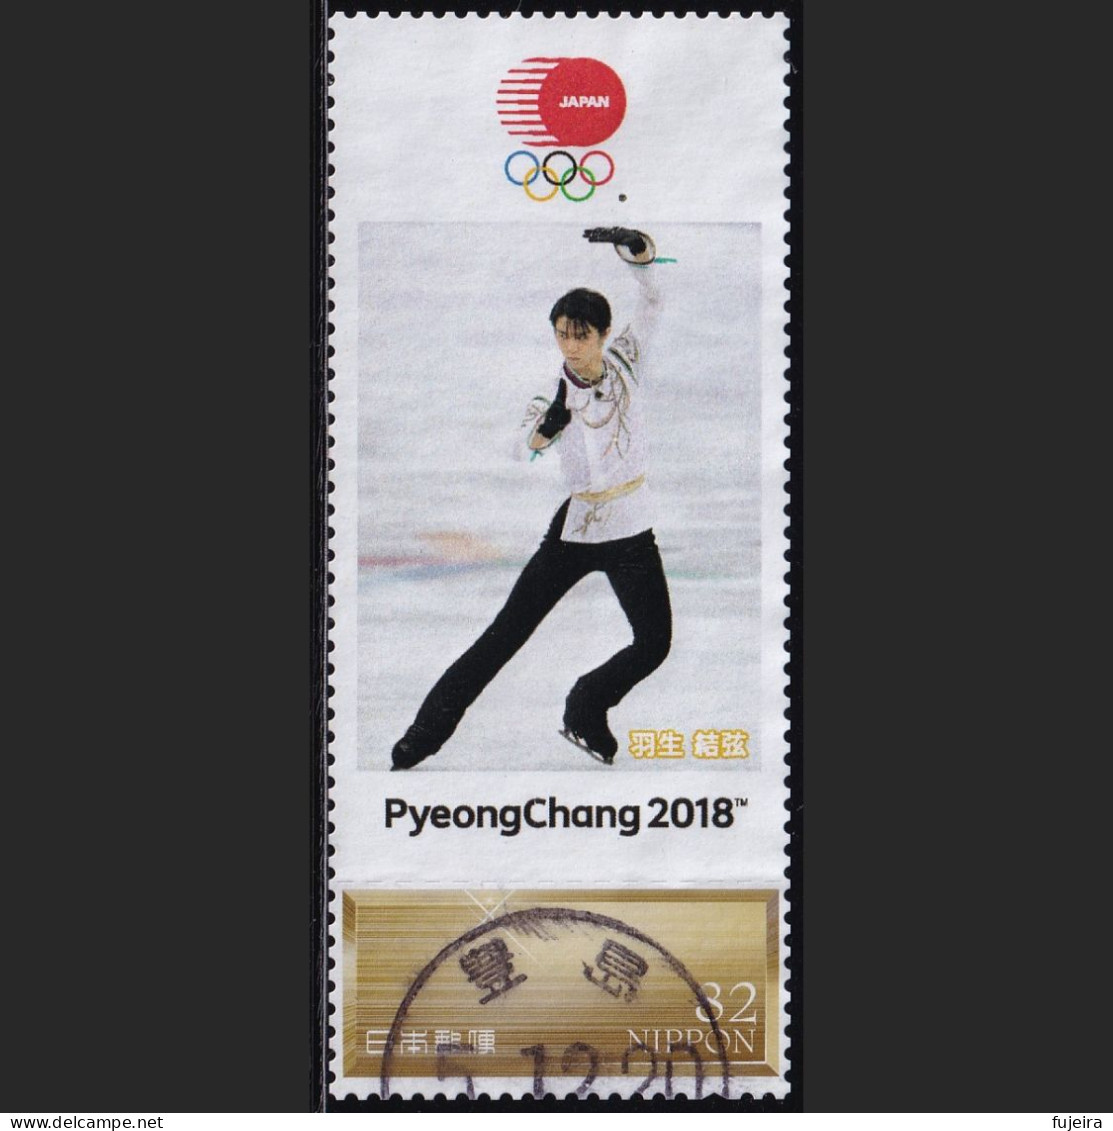 Japan Personalized Stamp, PyeonChang 2018 Olympic Hanyu Yuzuru Figure Skate (jpv9969) Used - Used Stamps